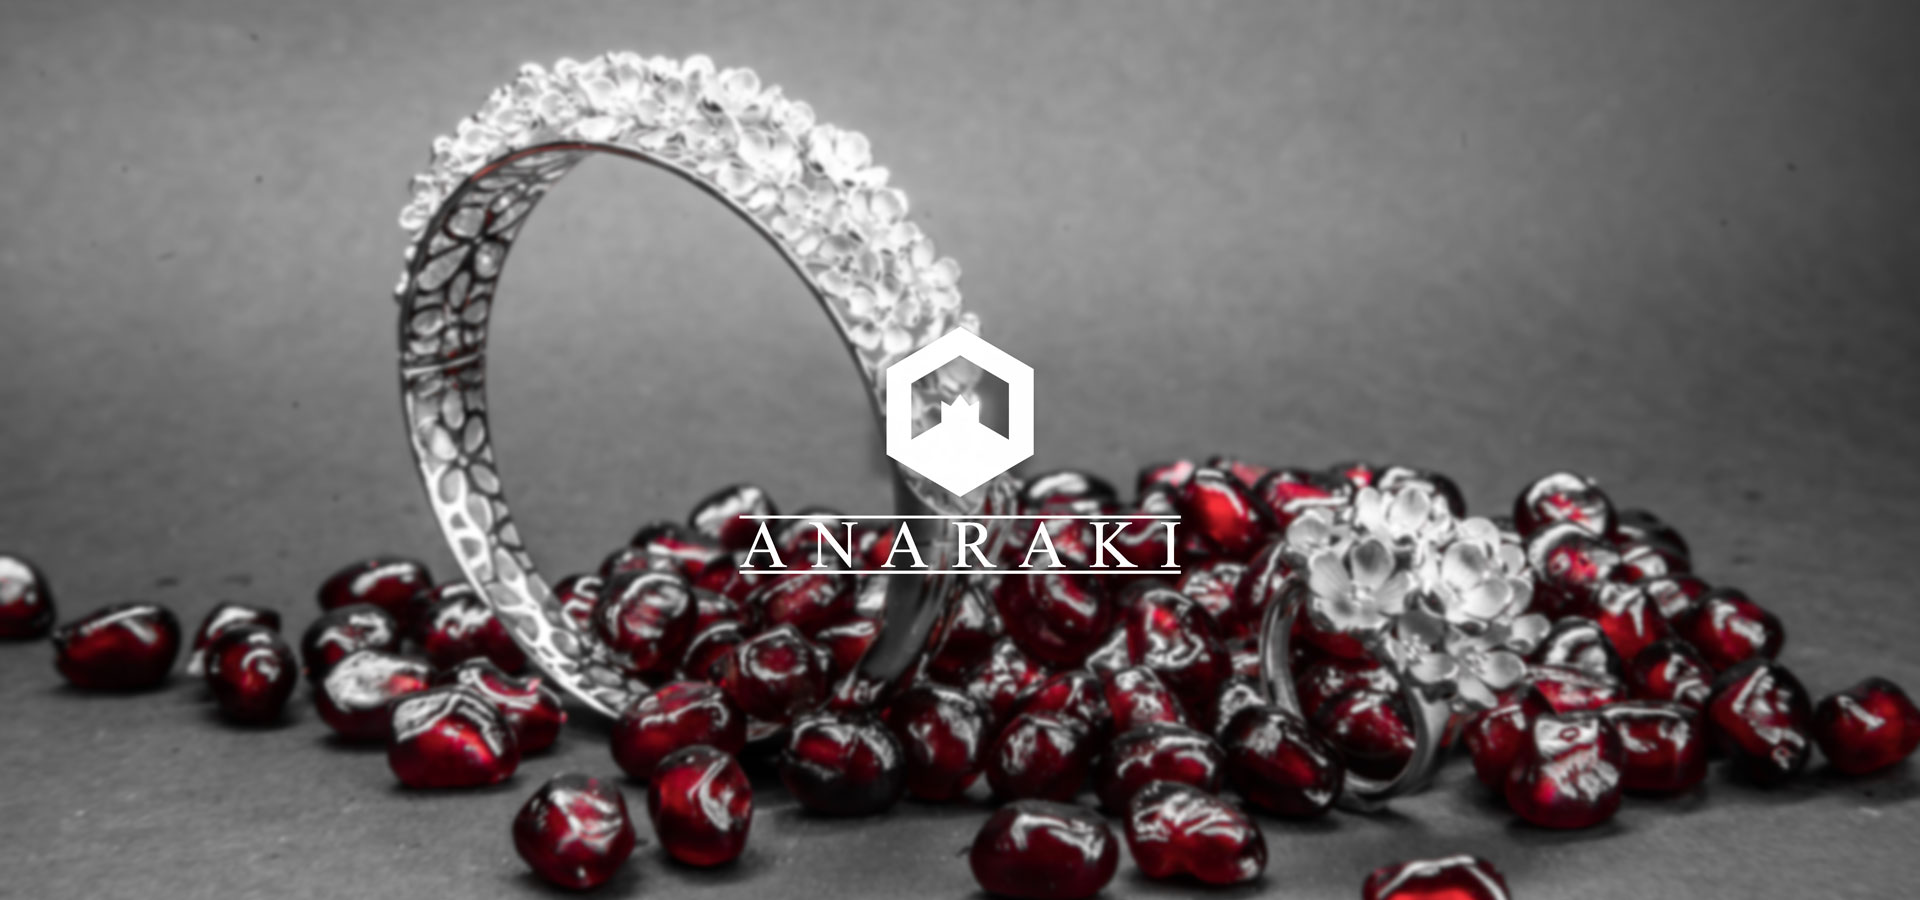 a graphic design for anaraki's jewelry logo design